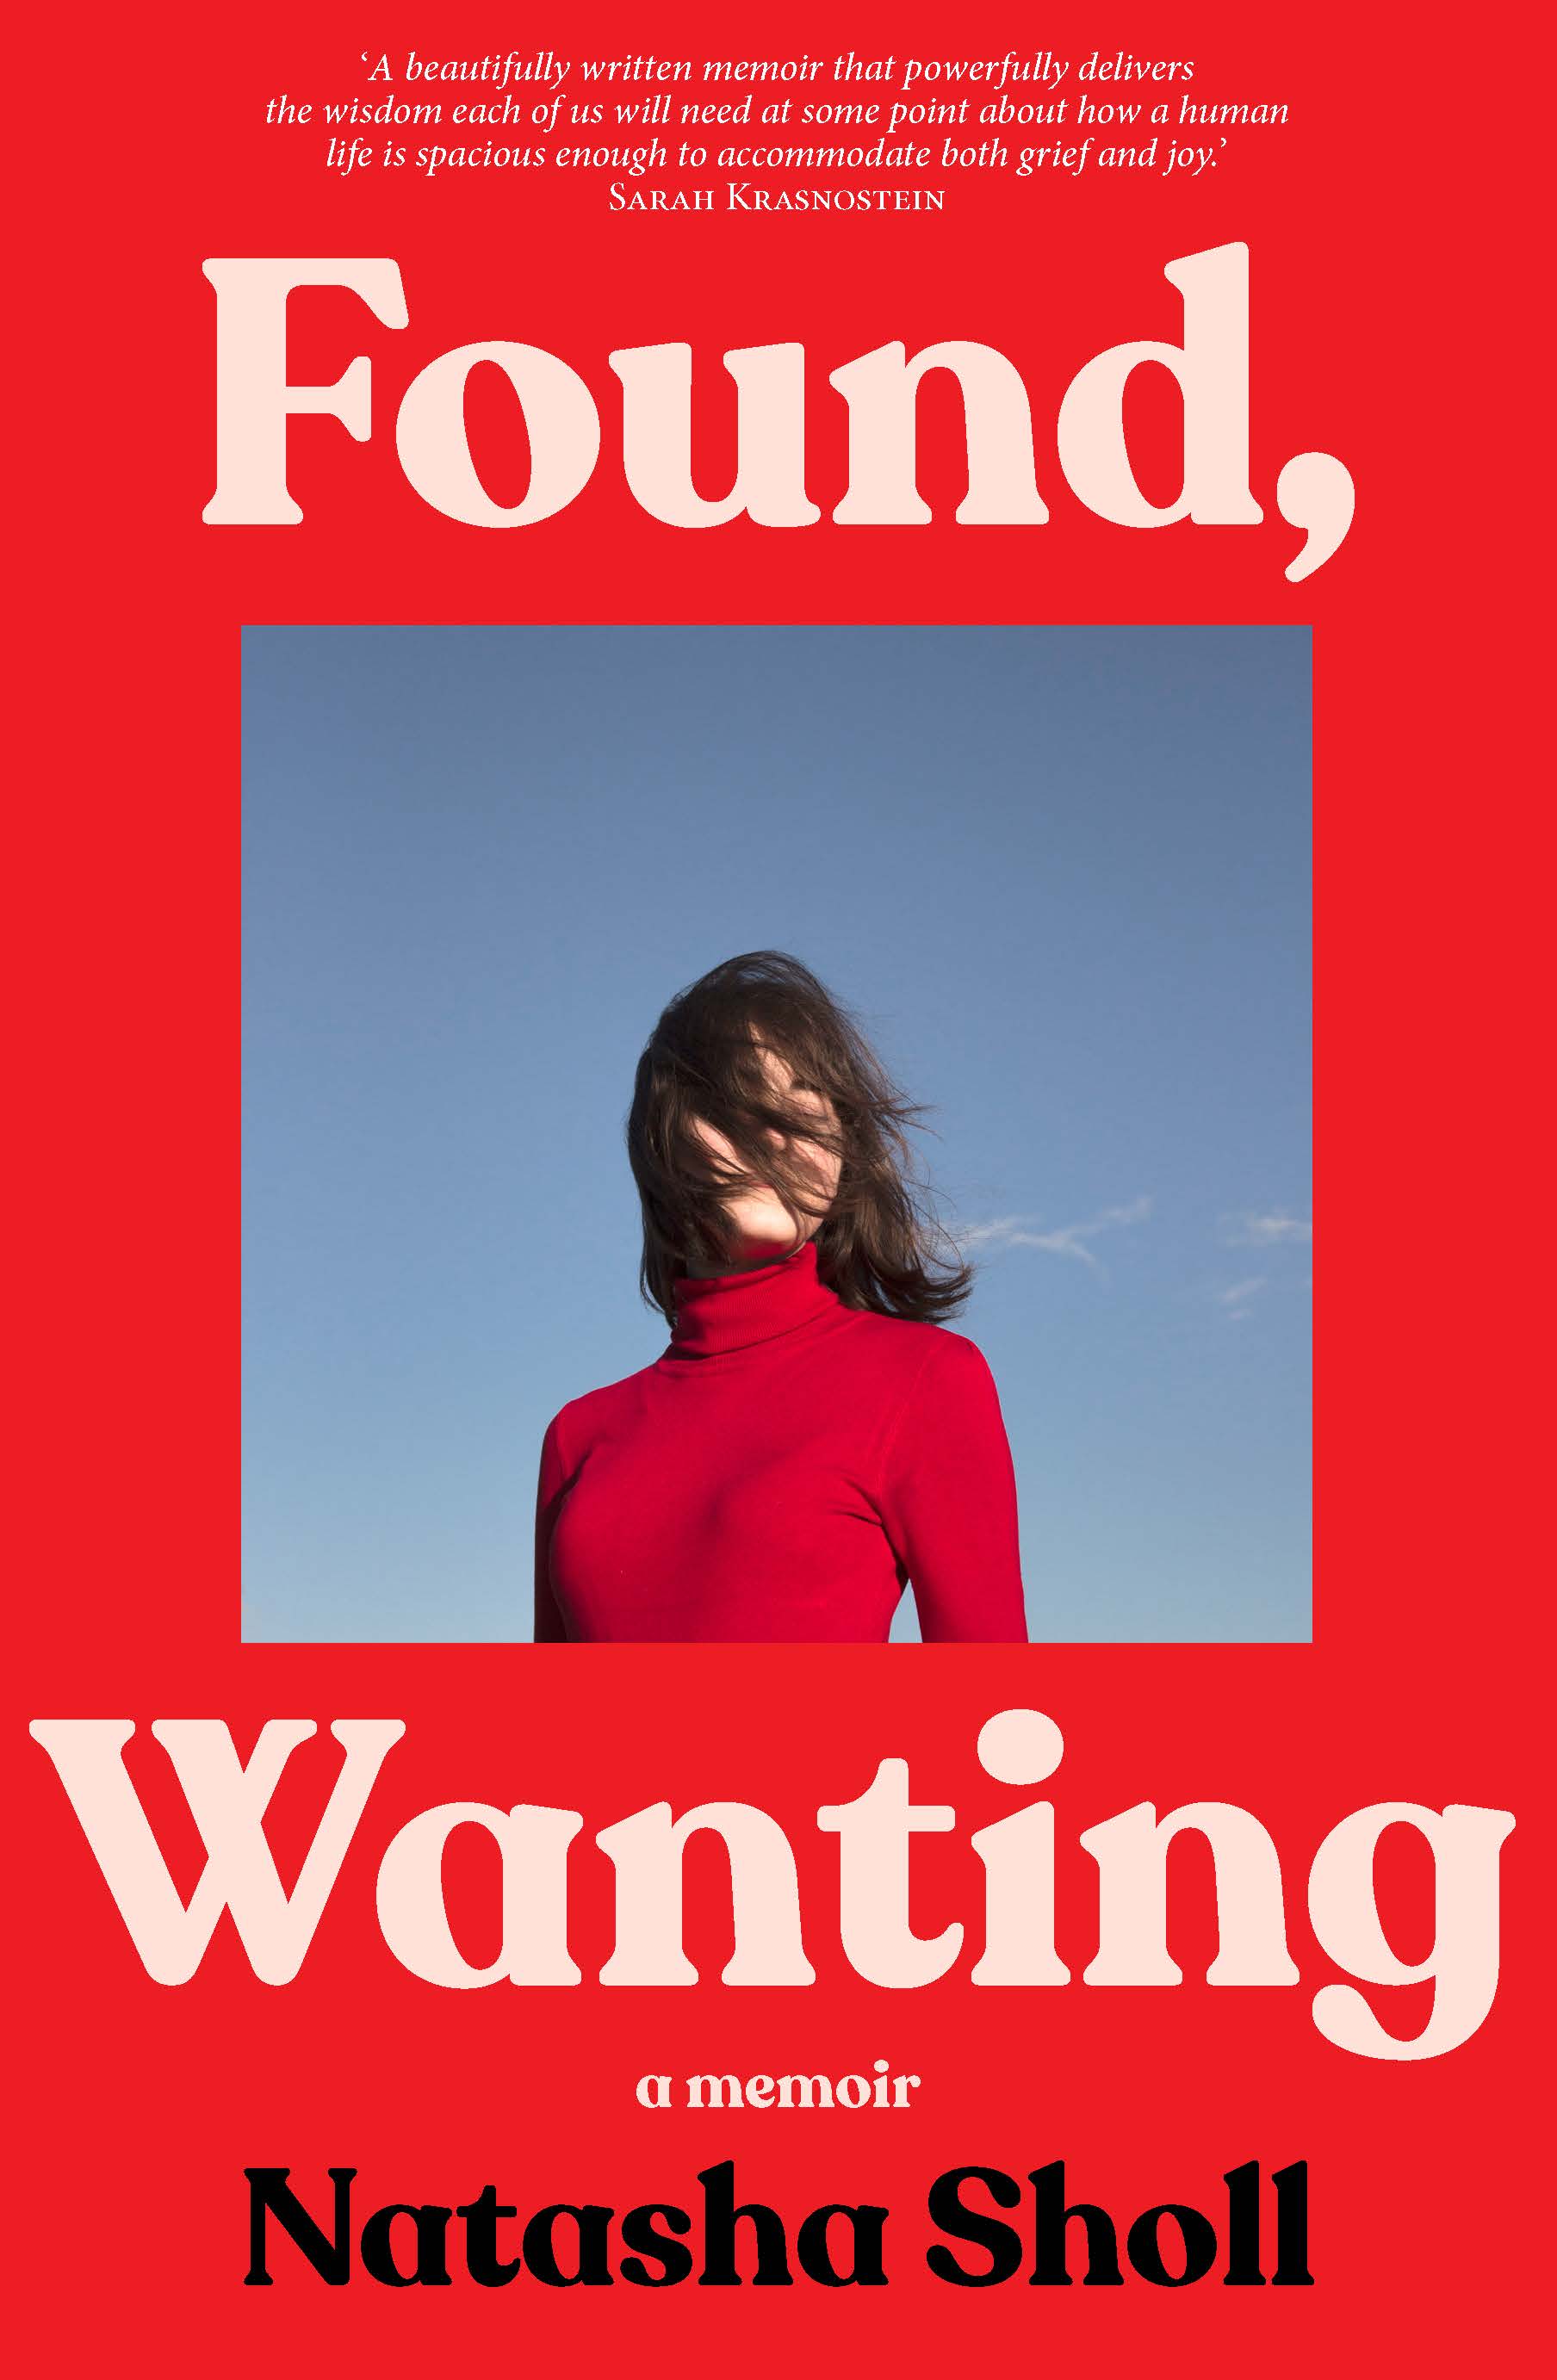 Found, Wanting by Natasha Sholl Free Download